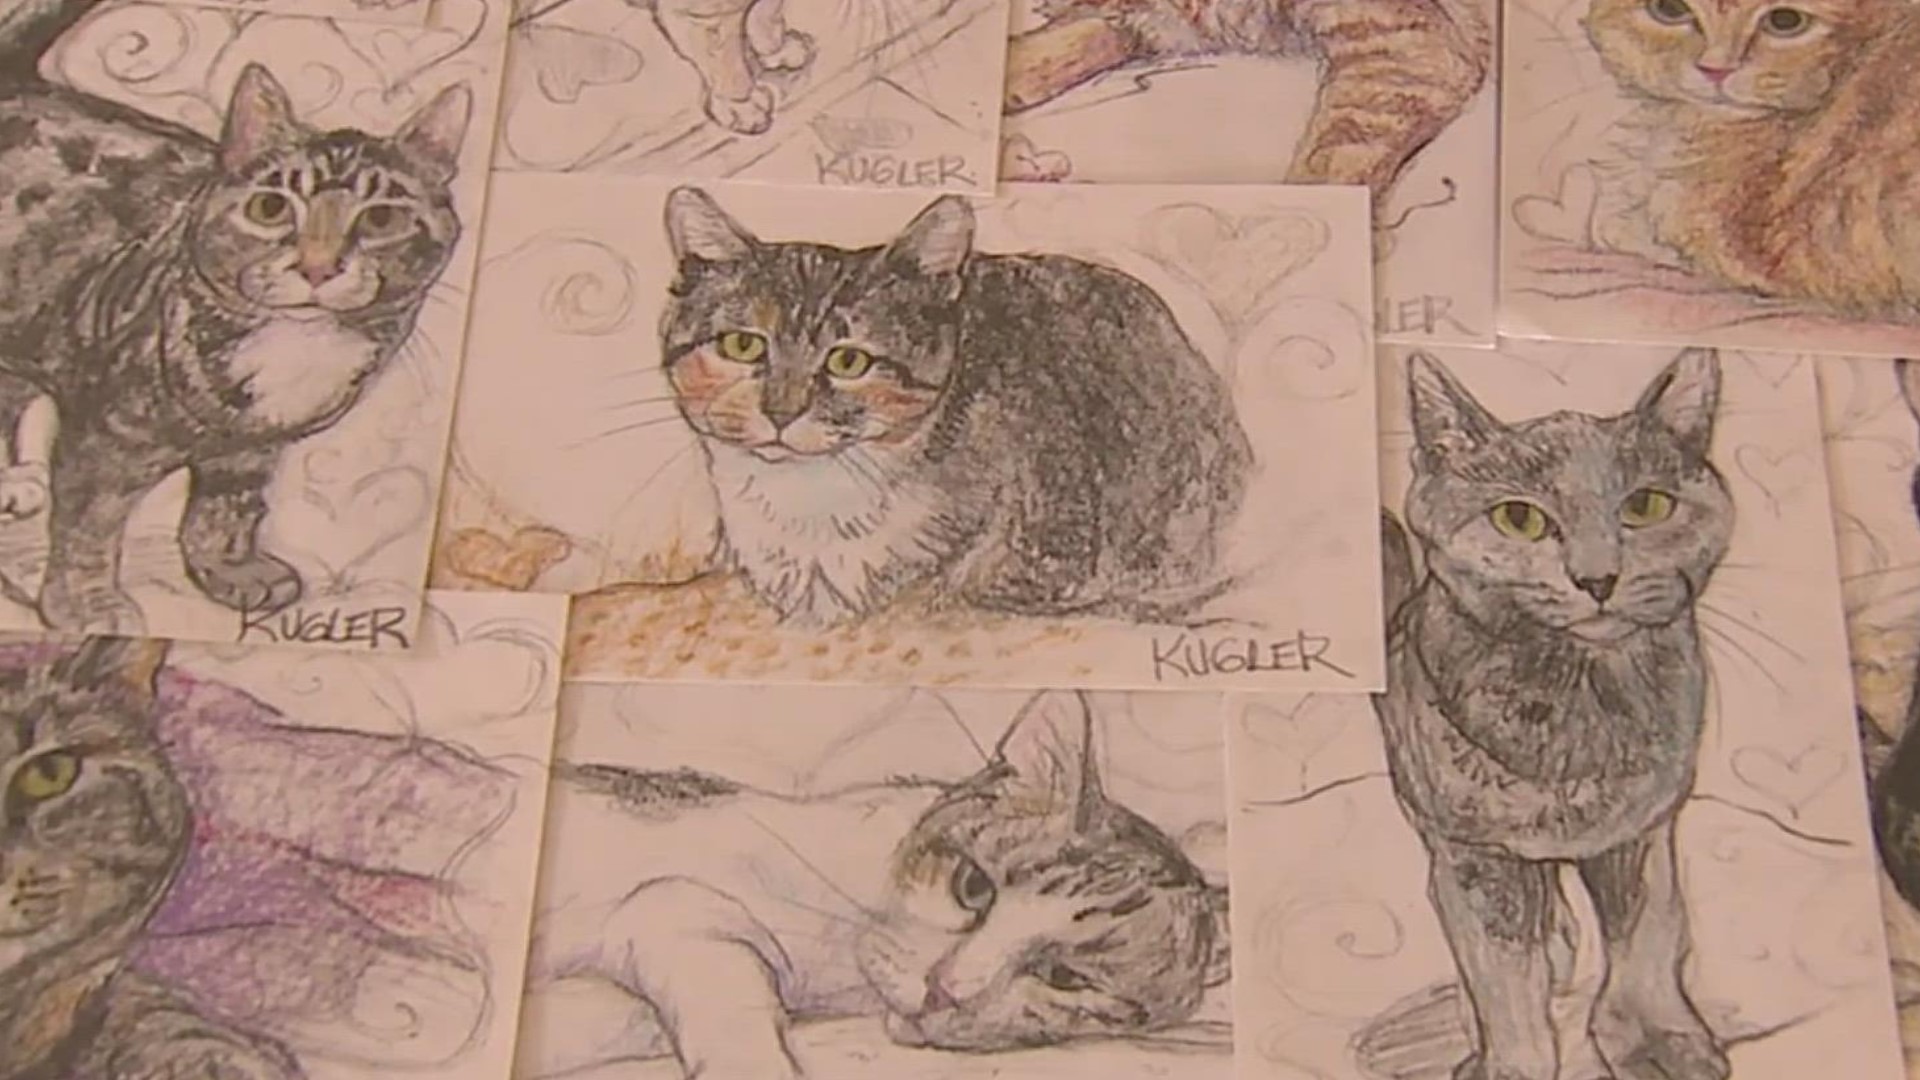 Artist Cheryl Kugler spent 100 days creating artwork to help area welfare organizations support animals.